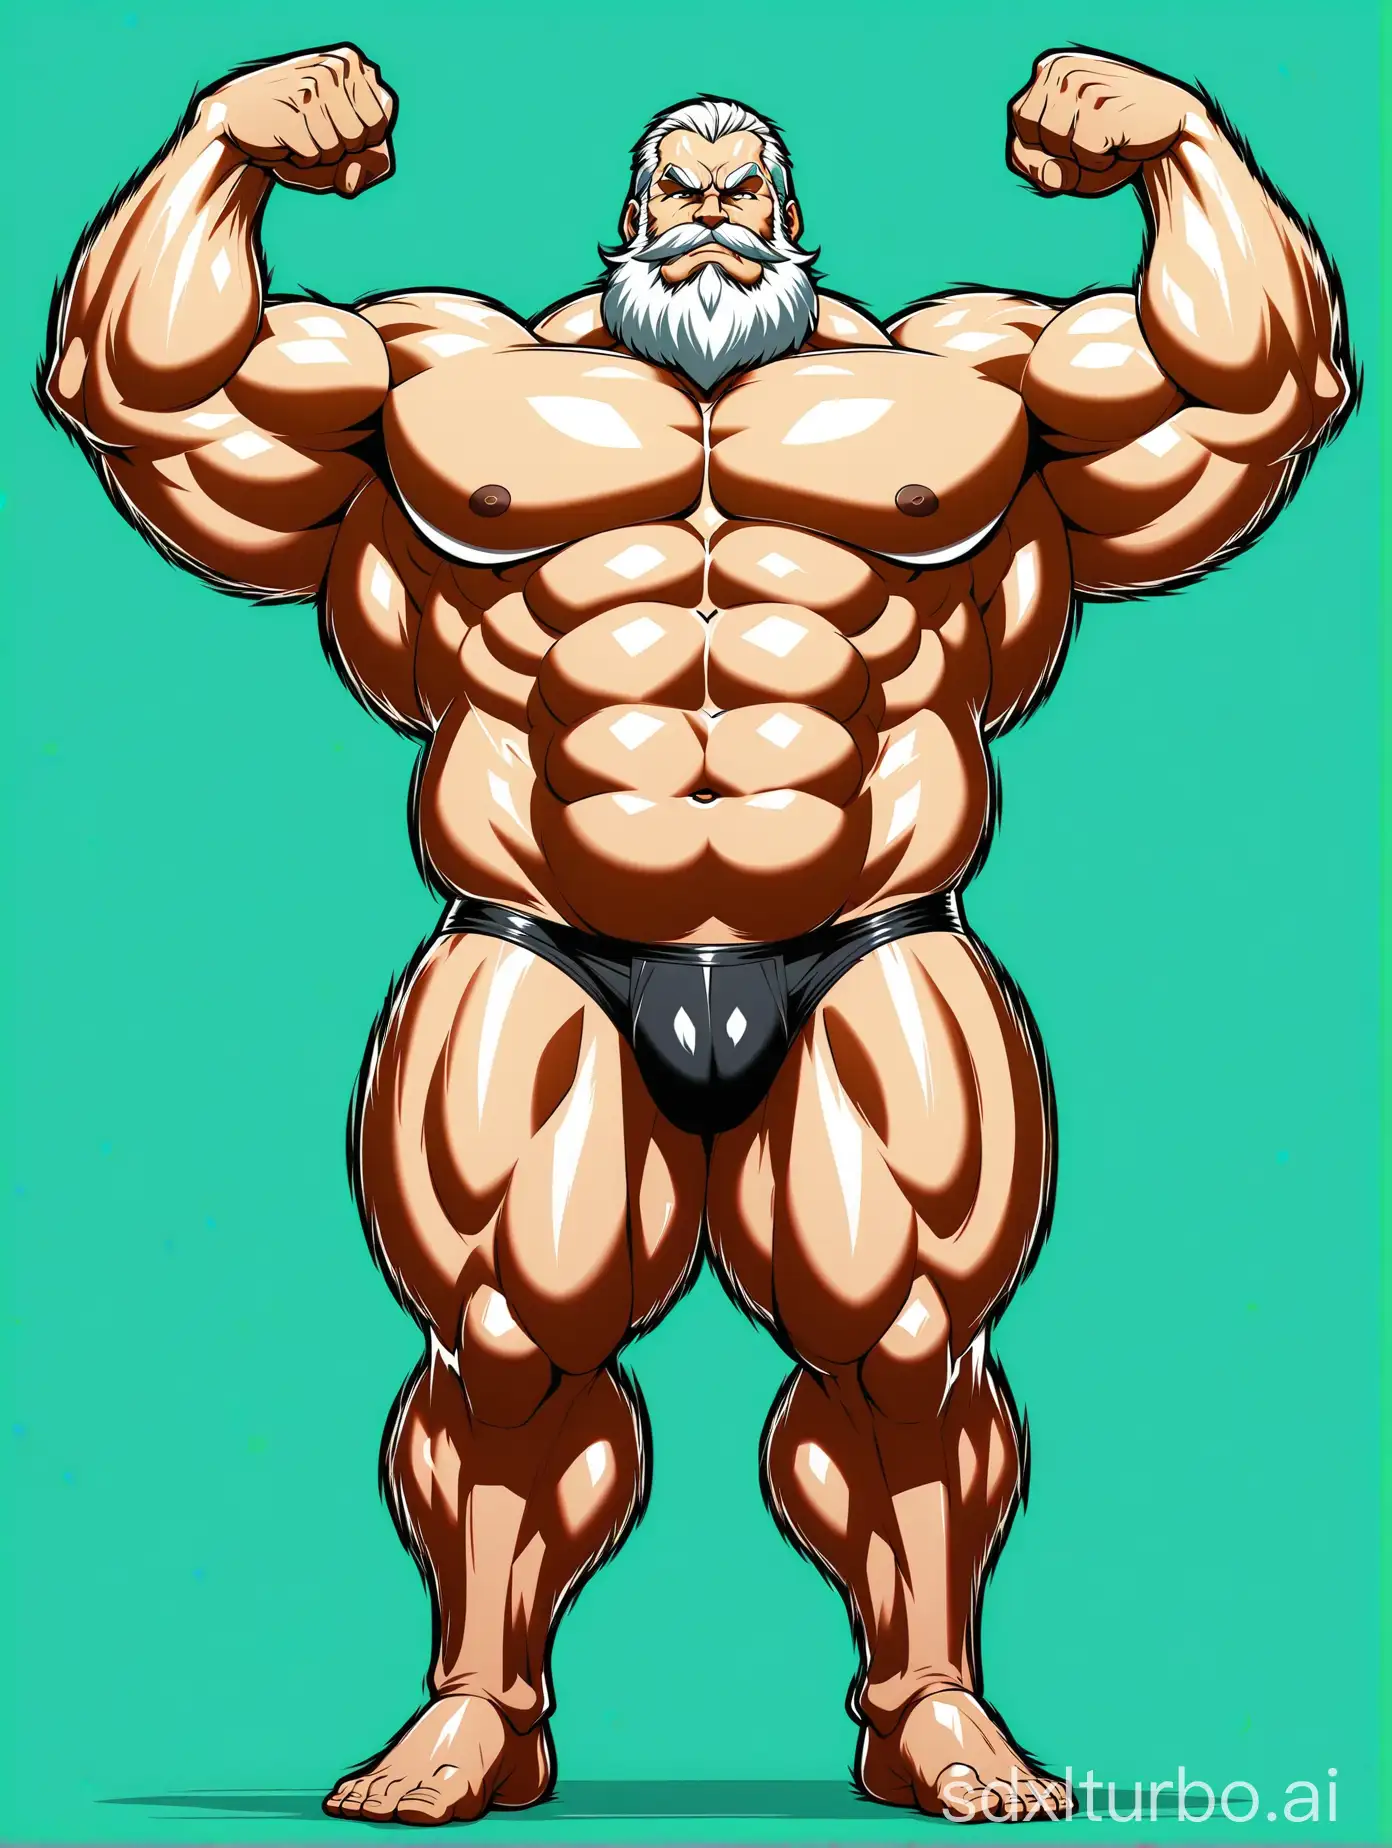 Massive-Muscle-Stud-Showing-Huge-Biceps-in-Underwear